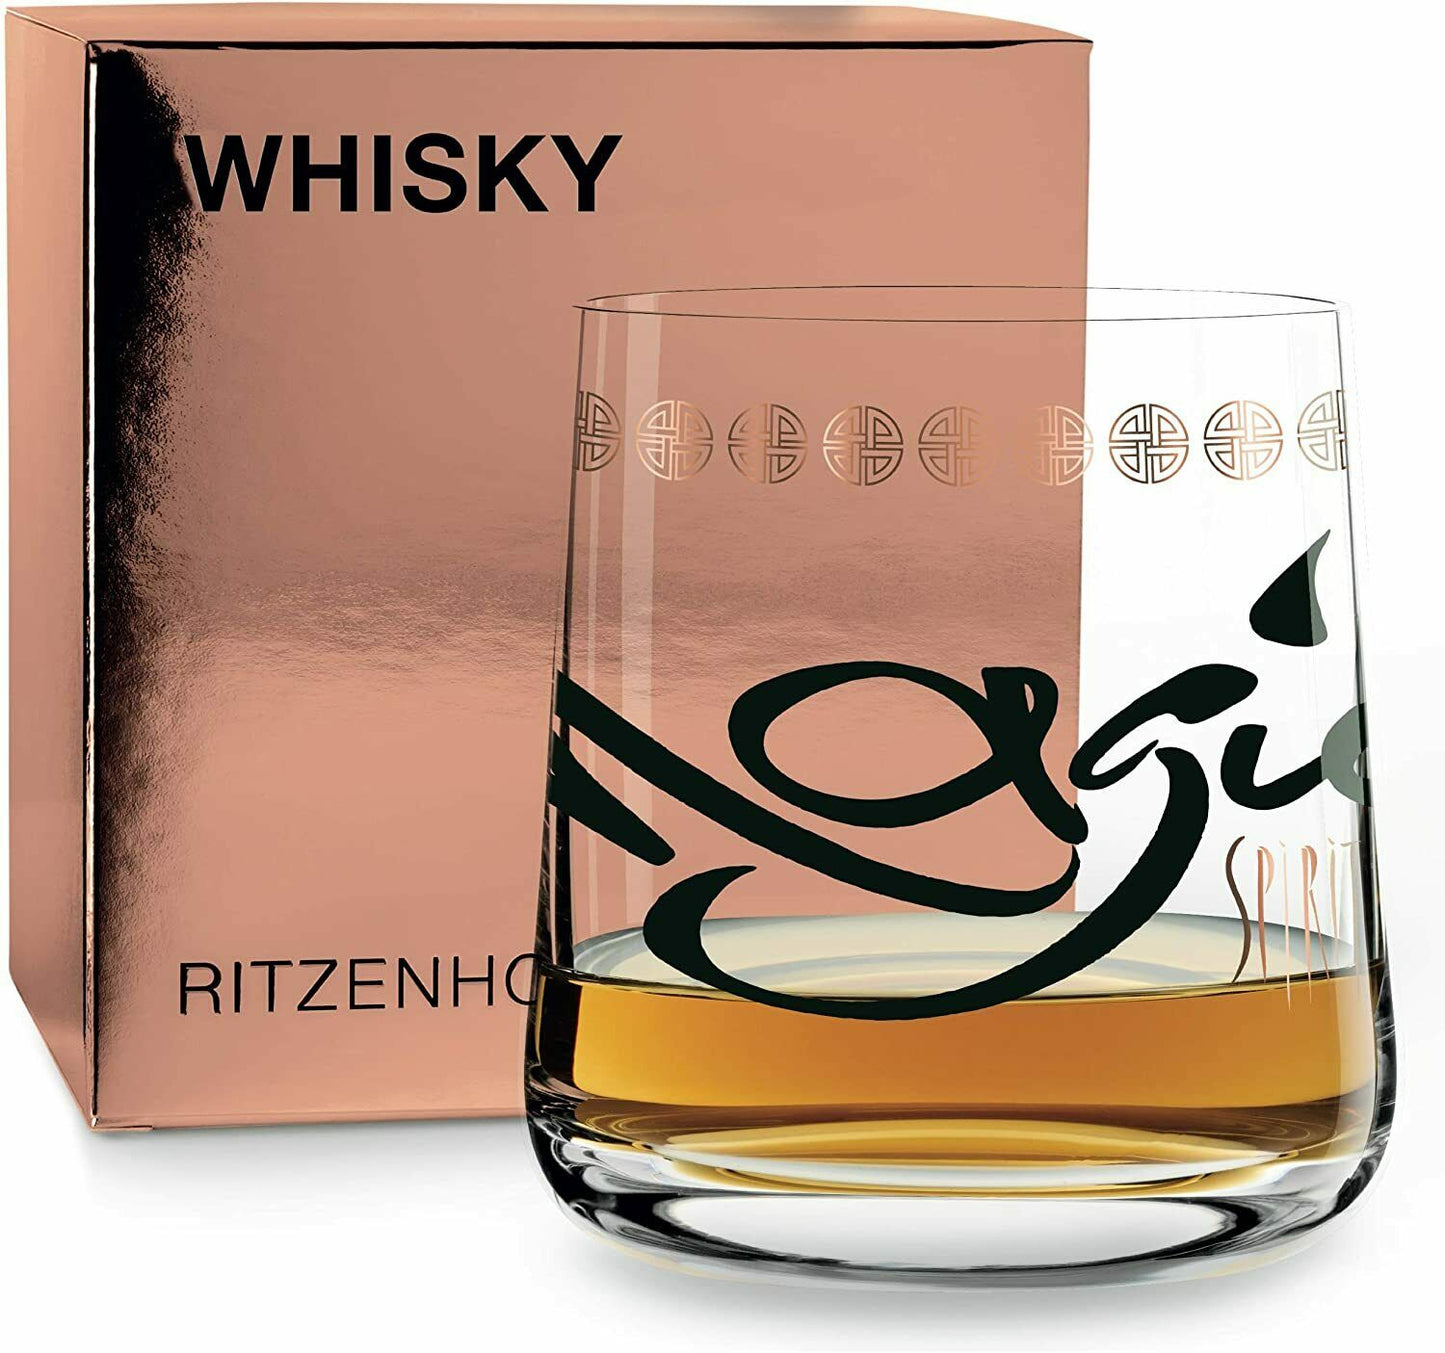 Bicchieri Ritzenhoff per whisky